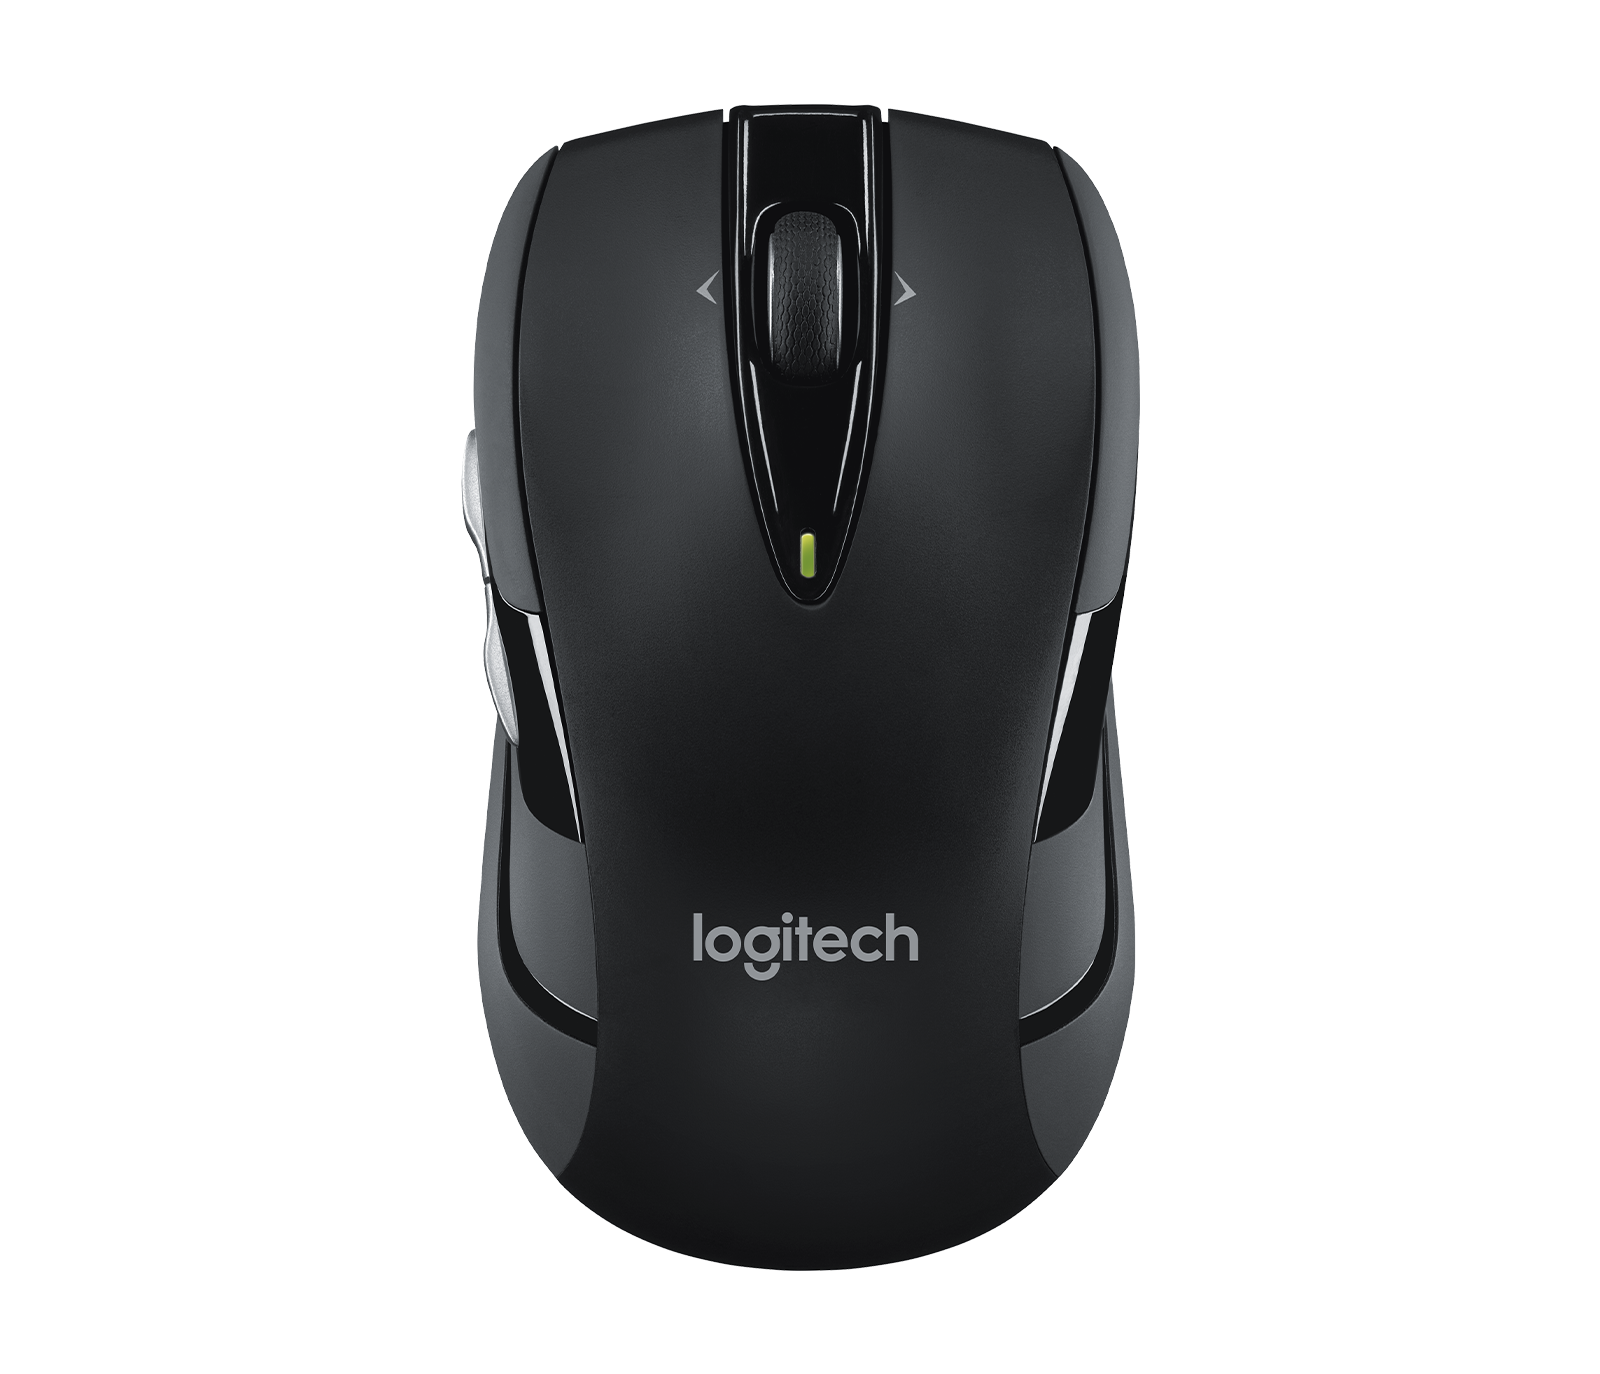 Logitech M545/M546 2.4G Wireless Mouse 1000DPI USB Optical Computer Gaming Mice 